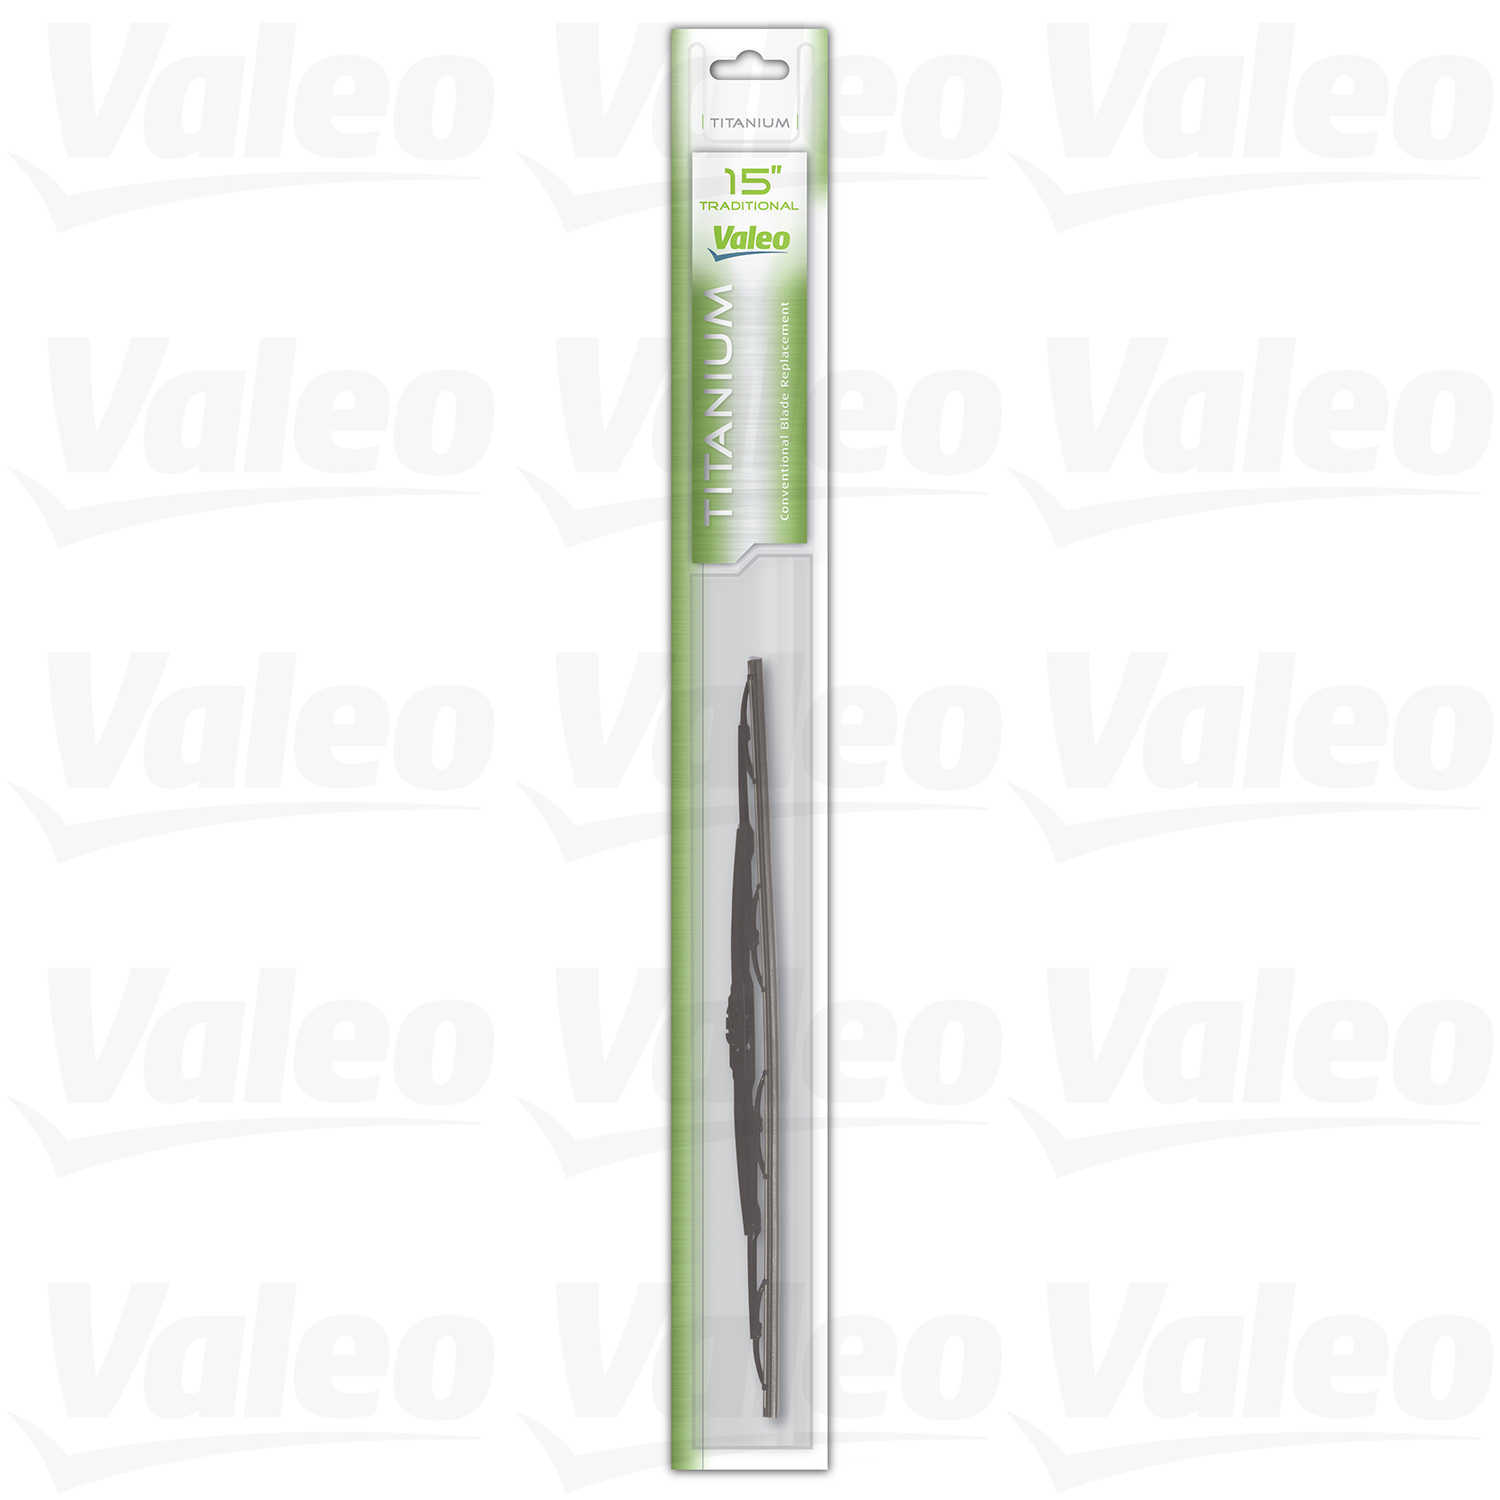 VALEO - Traditional Titanium Wiper Blade (Front Right) - VEO 604466